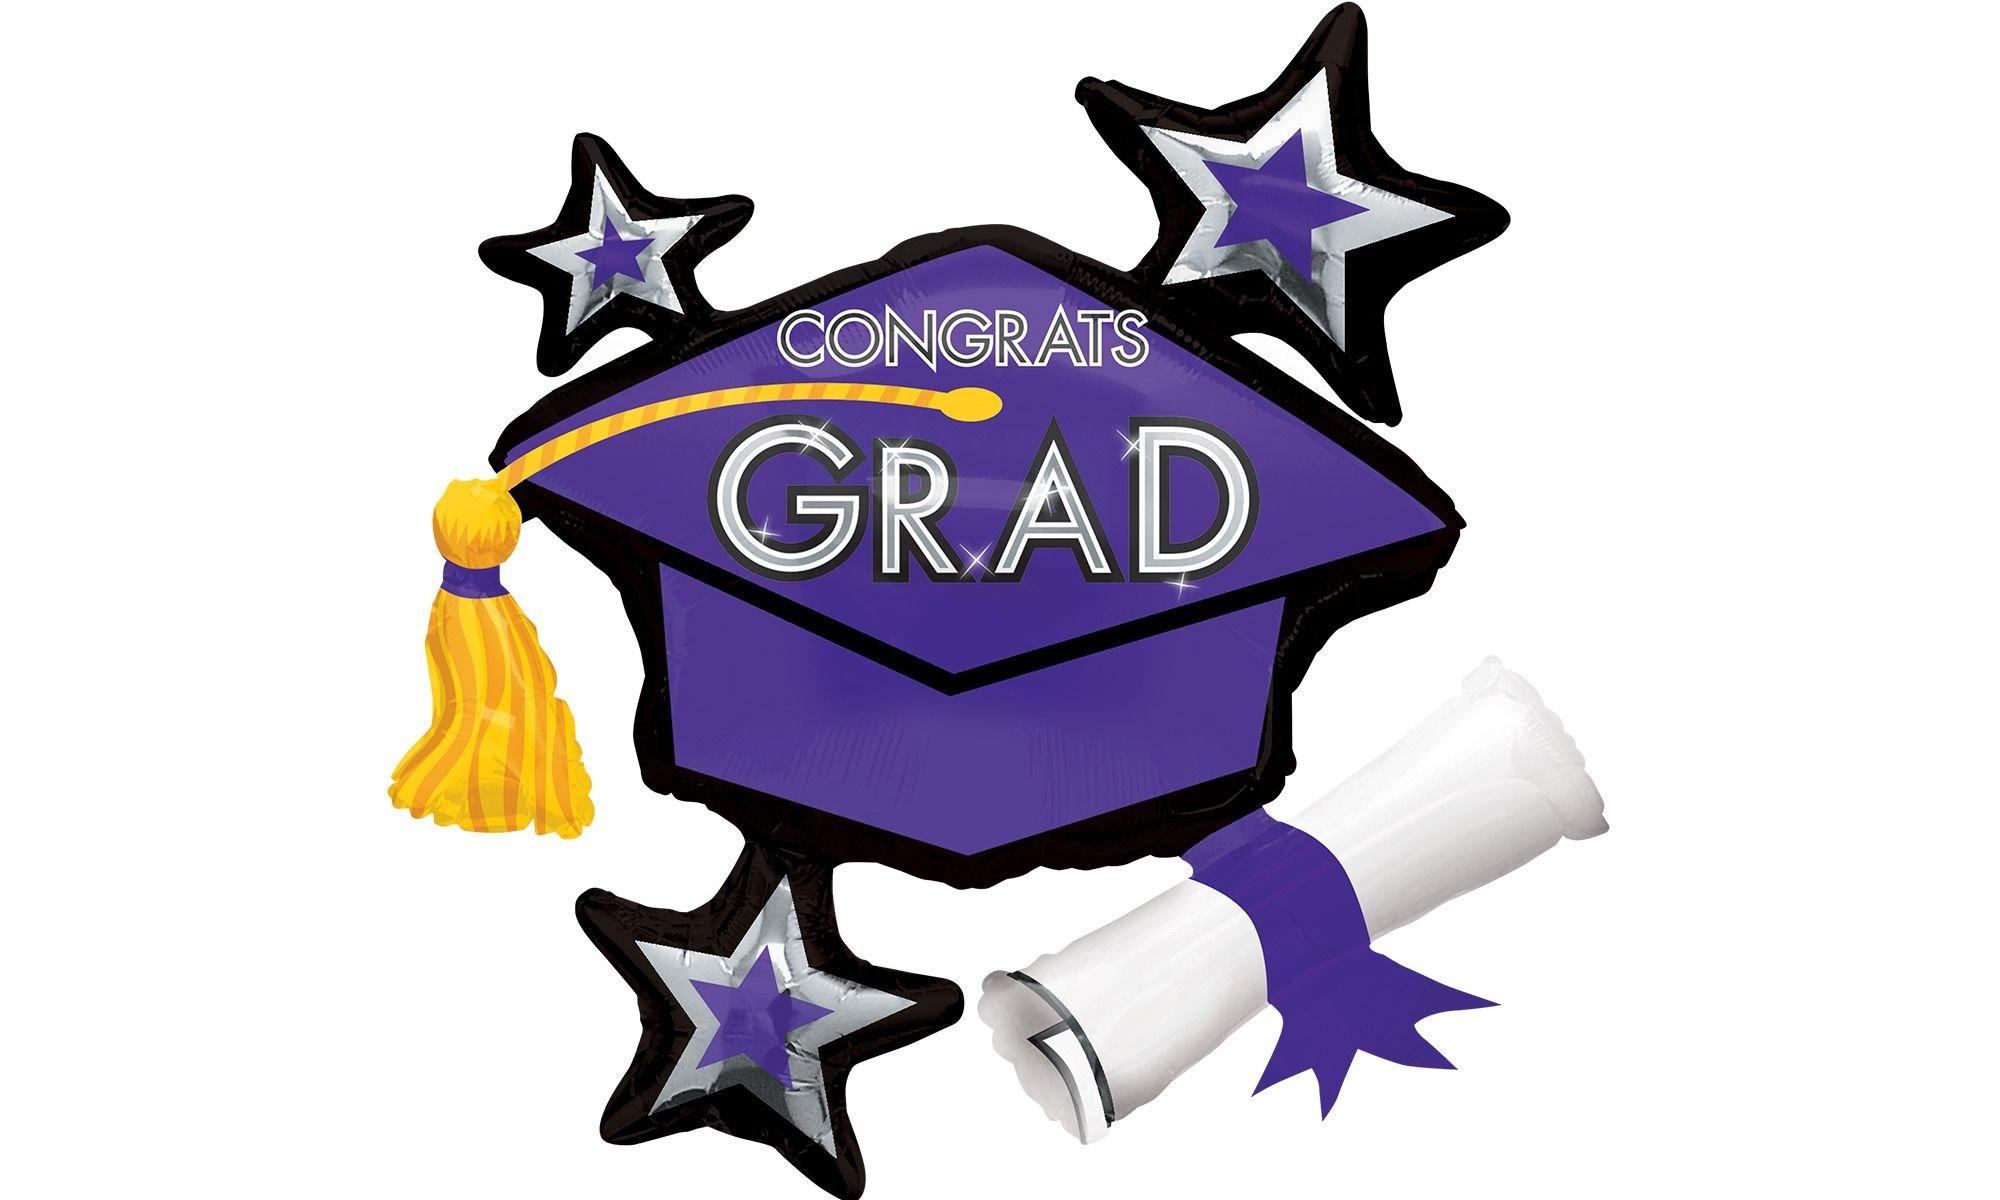 Star Graduation Cap Graduation Balloon, 31in